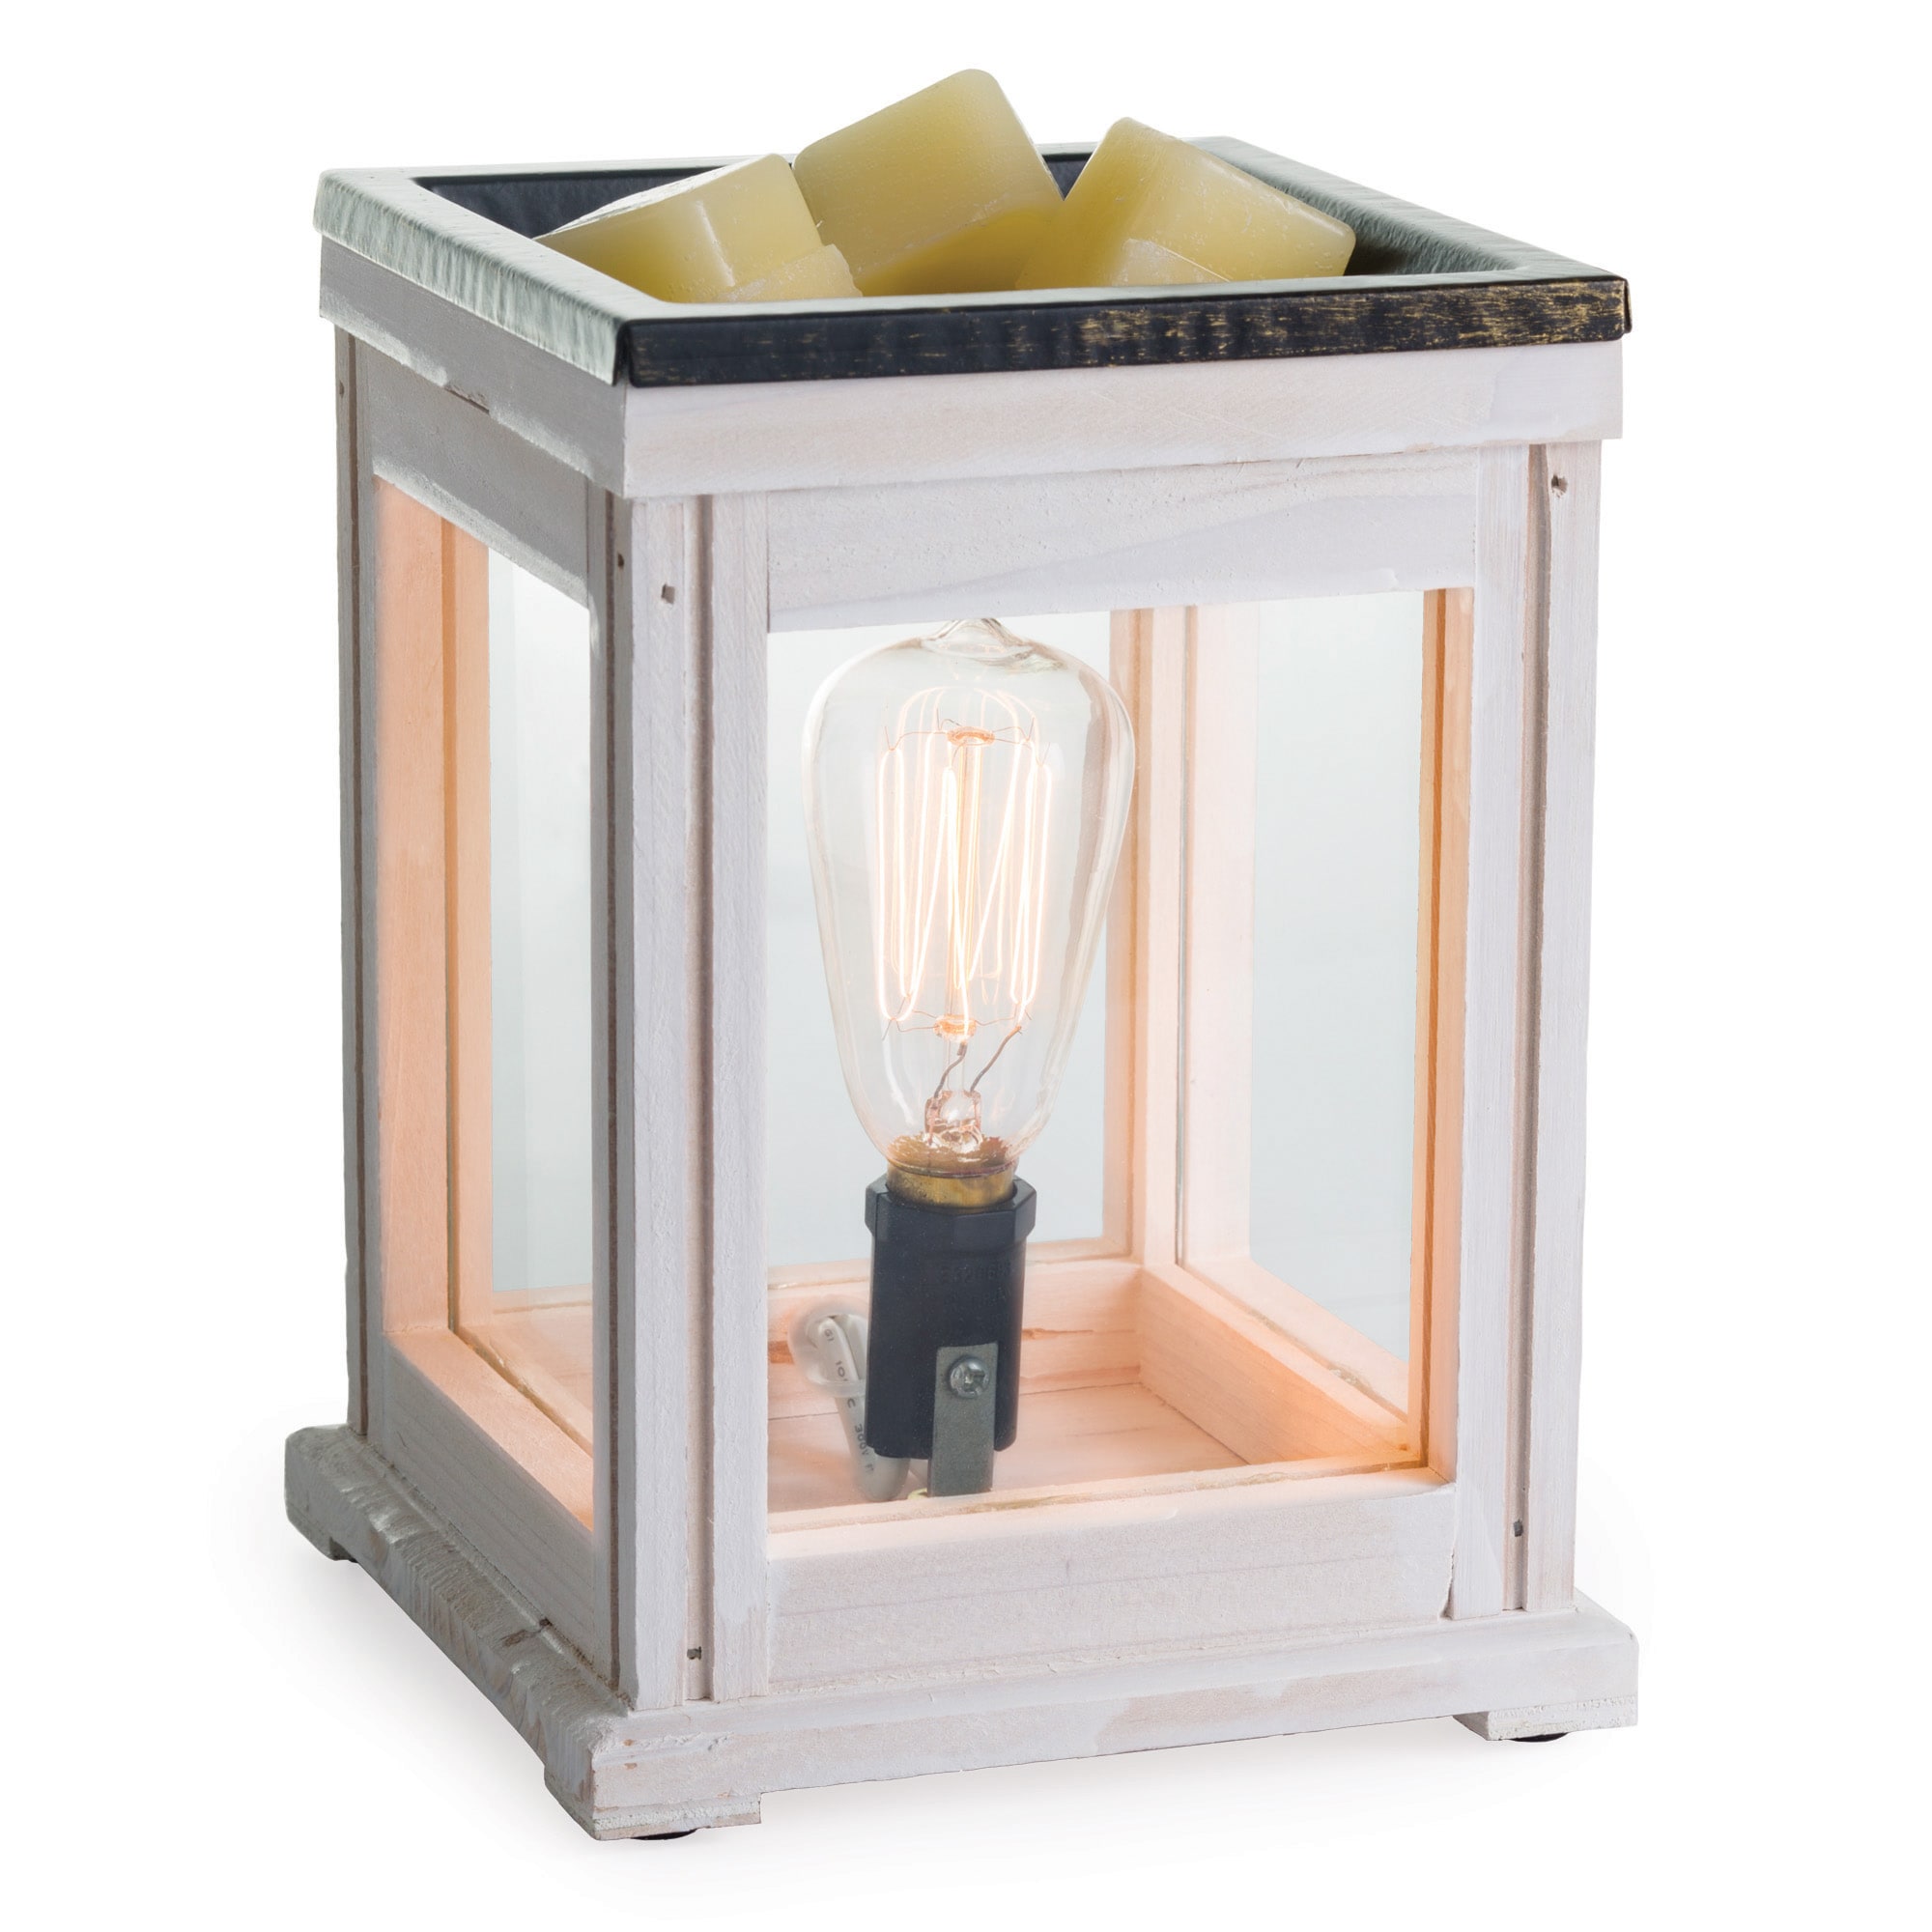 Wax Warmer - Edison Bulb Wood & Glass Illumination